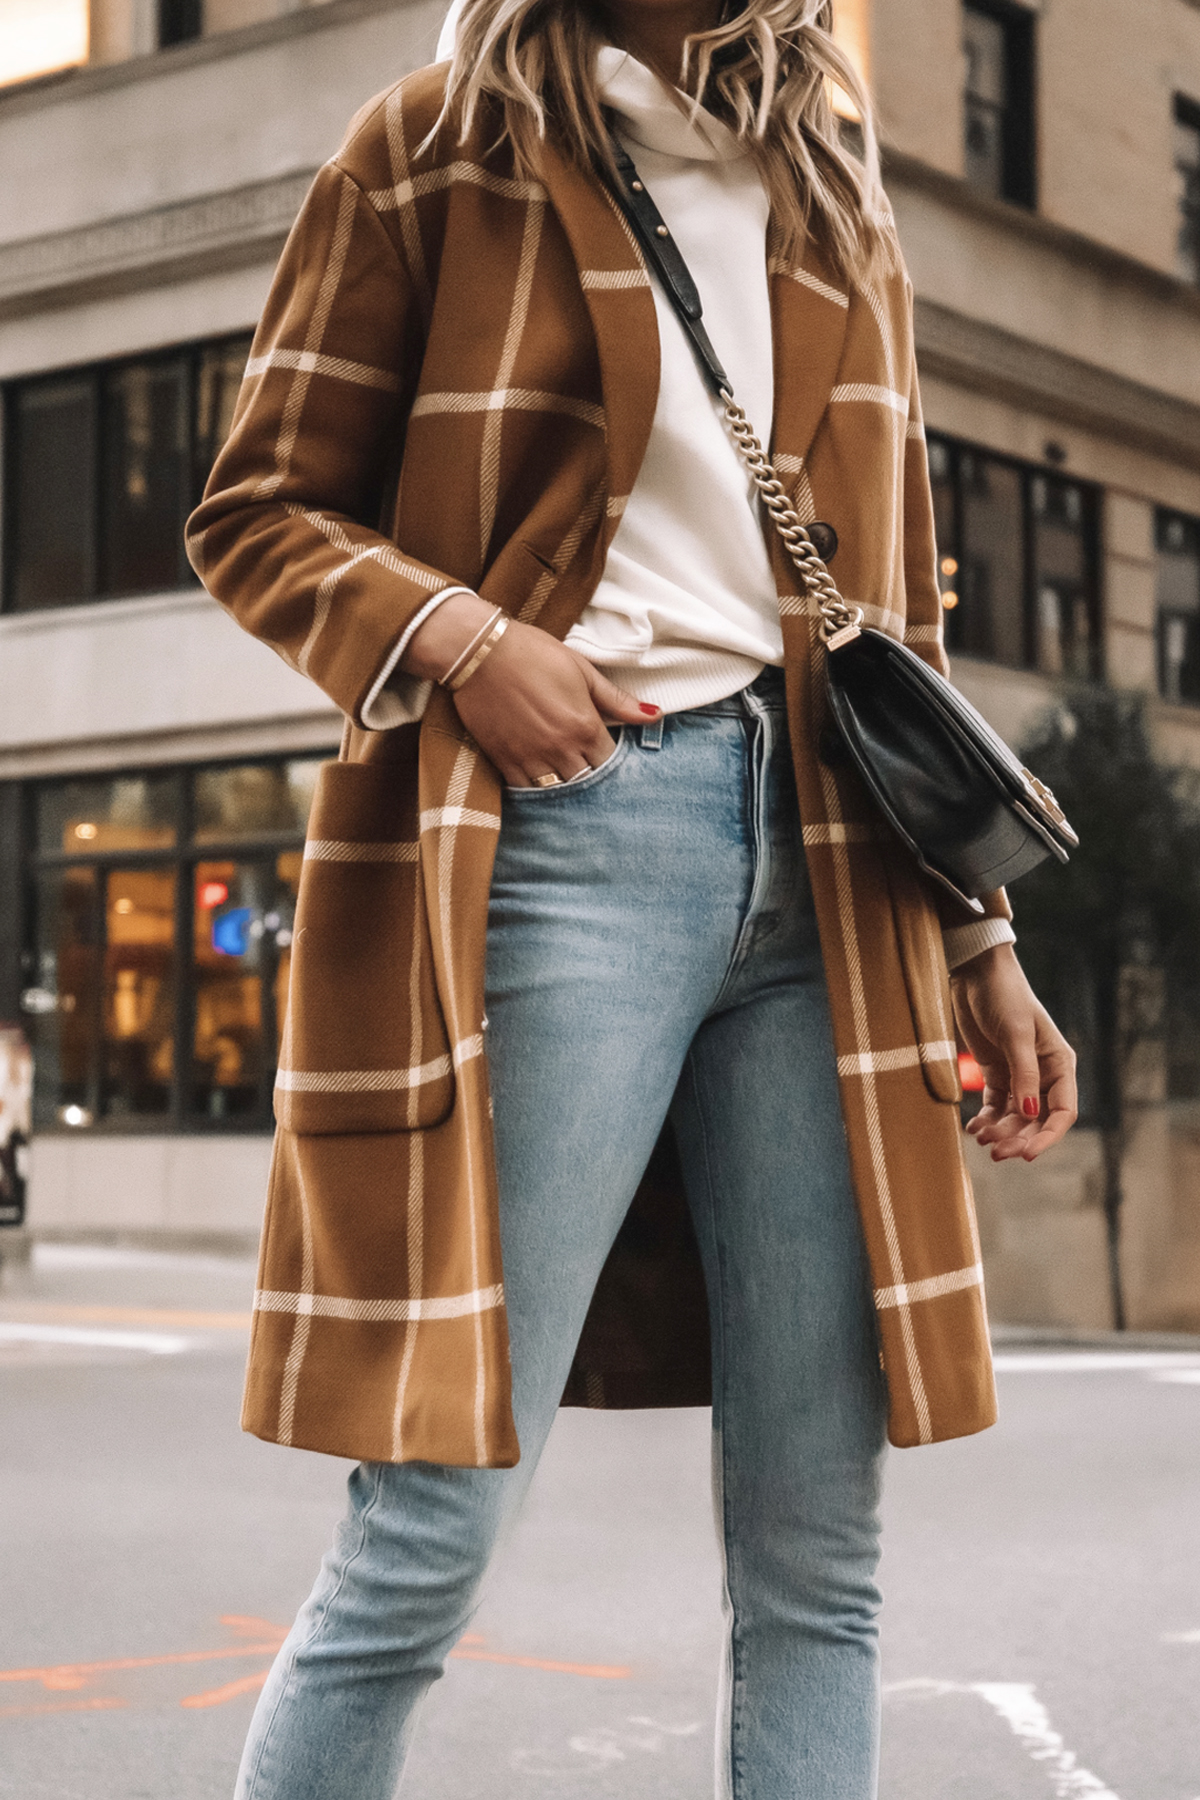 Fashion Jackson Madewell Camel Plaid Coat Ivory Sweatshirt Jeans Outfit 2